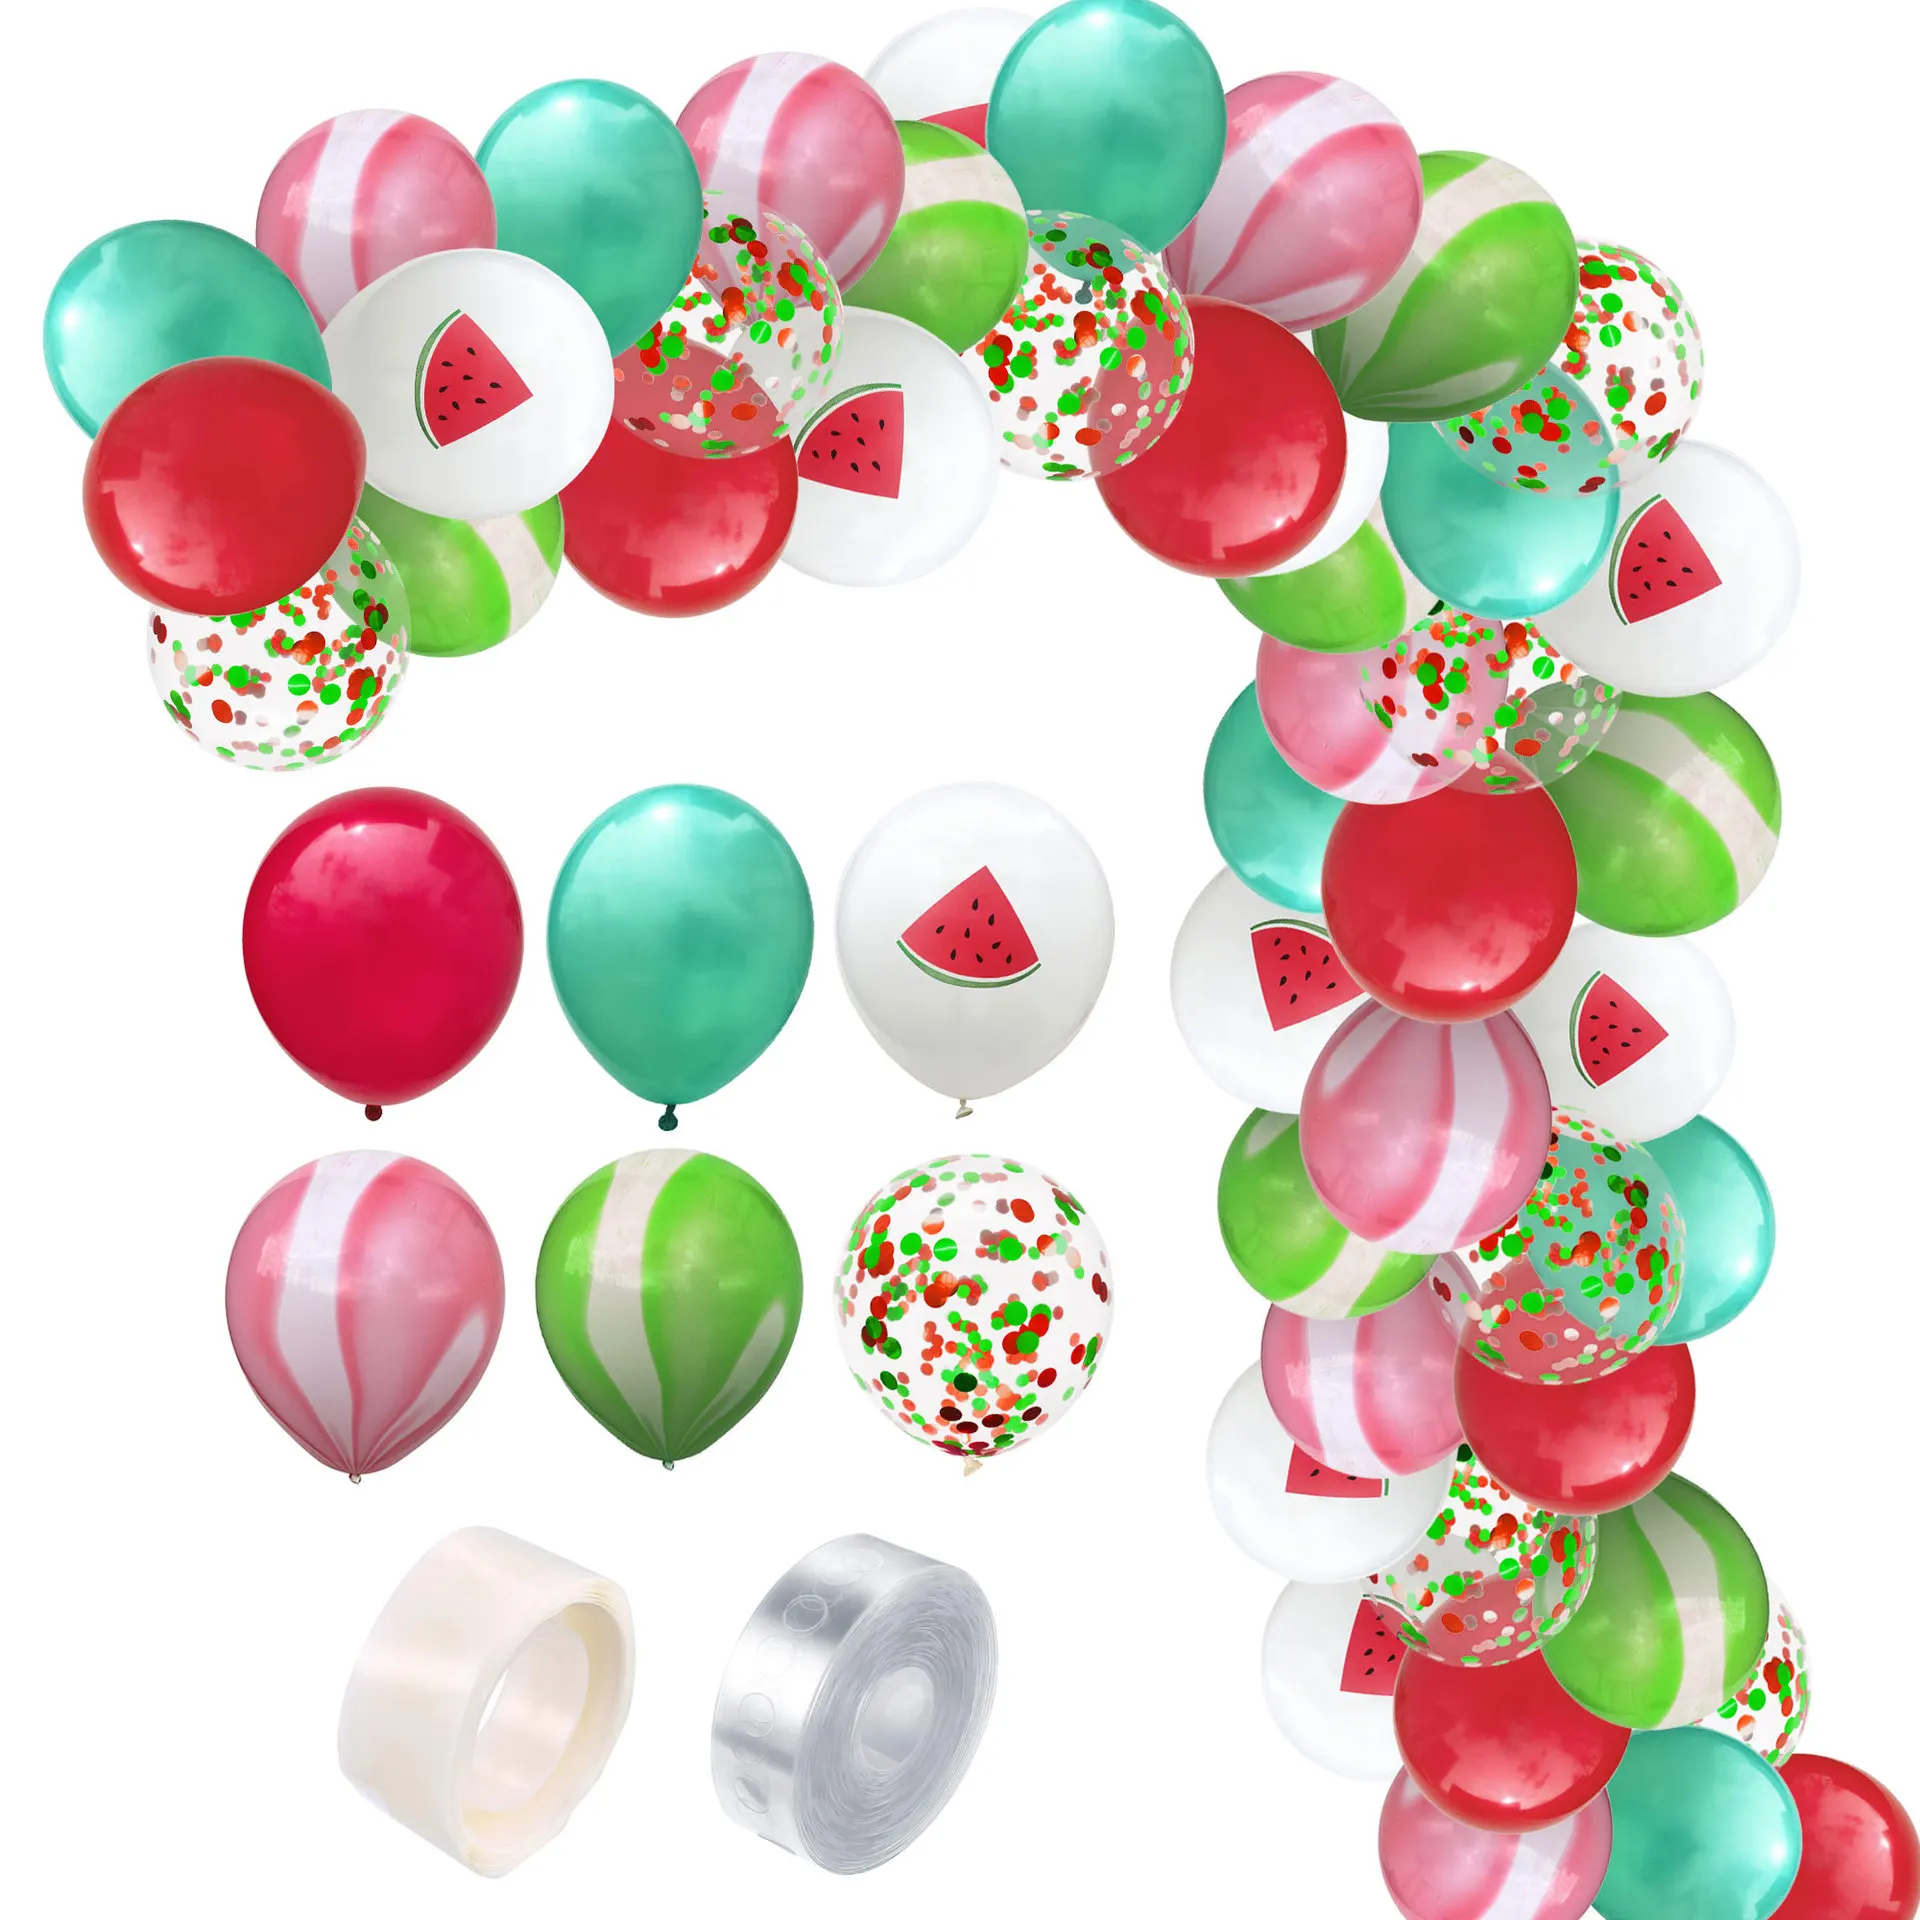 

62 PCS / LOT Balloon Chain Combo Set Birthday Wedding Party Decorative Flamingo Pineapple Balloon